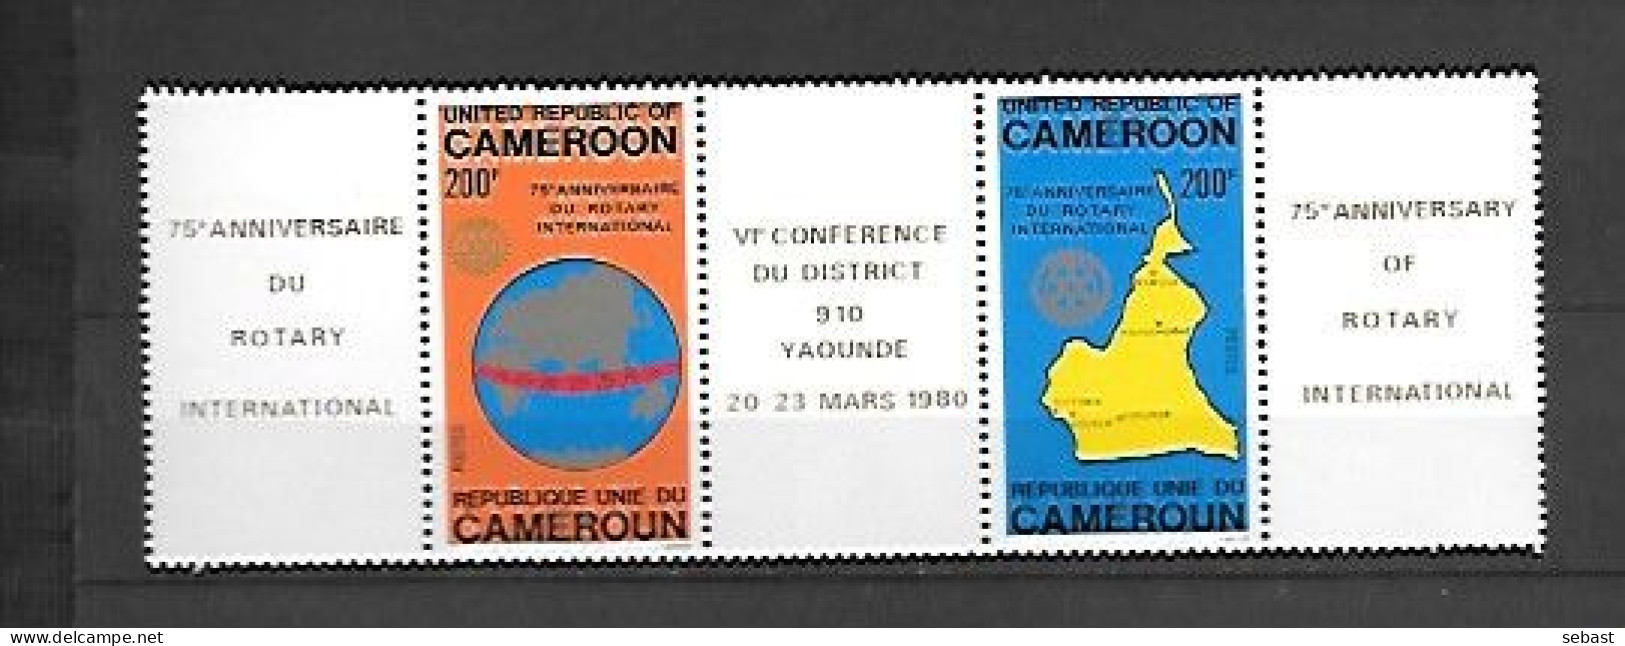 TIMBRE NEUF DU CAMEROUN DE 1980 N° MICHEL 925/26 - Camerun (1960-...)